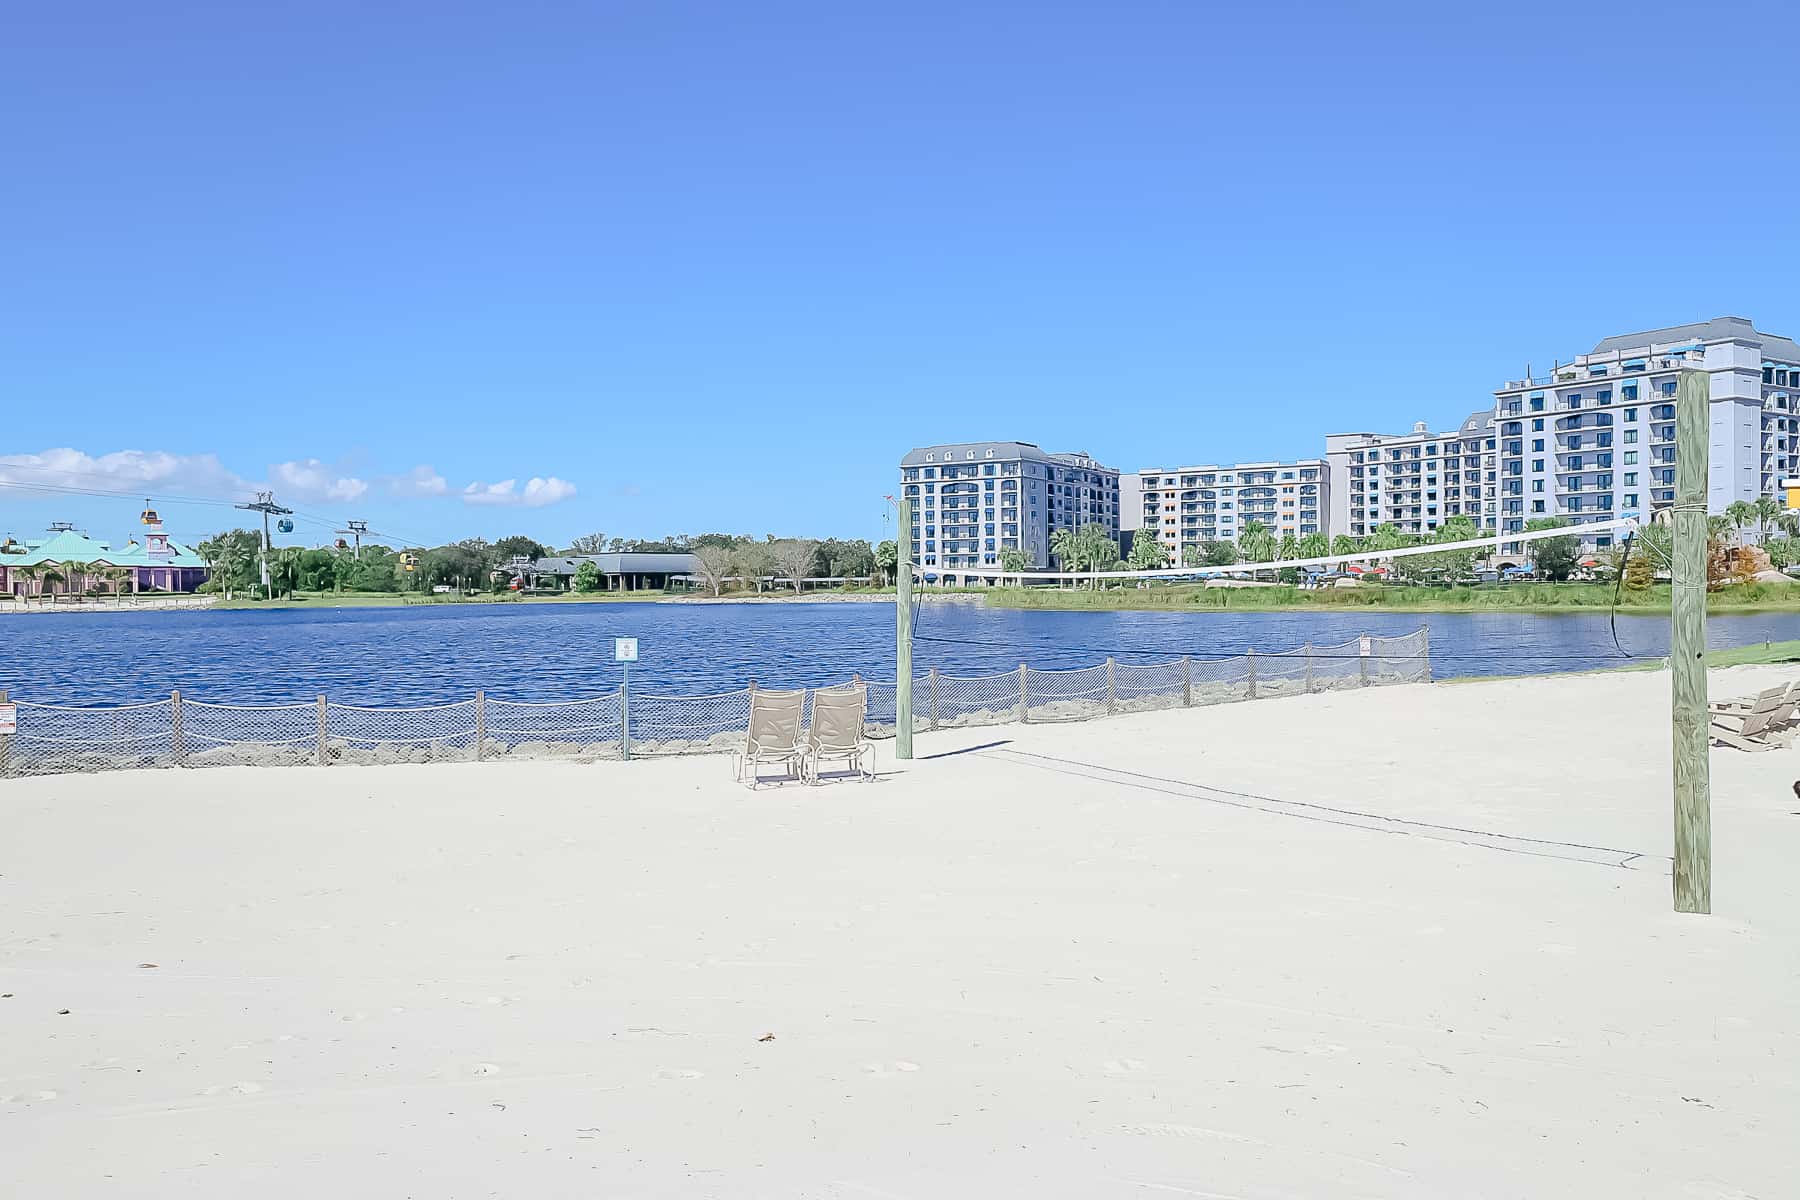 Volleyball net on a white sand beach